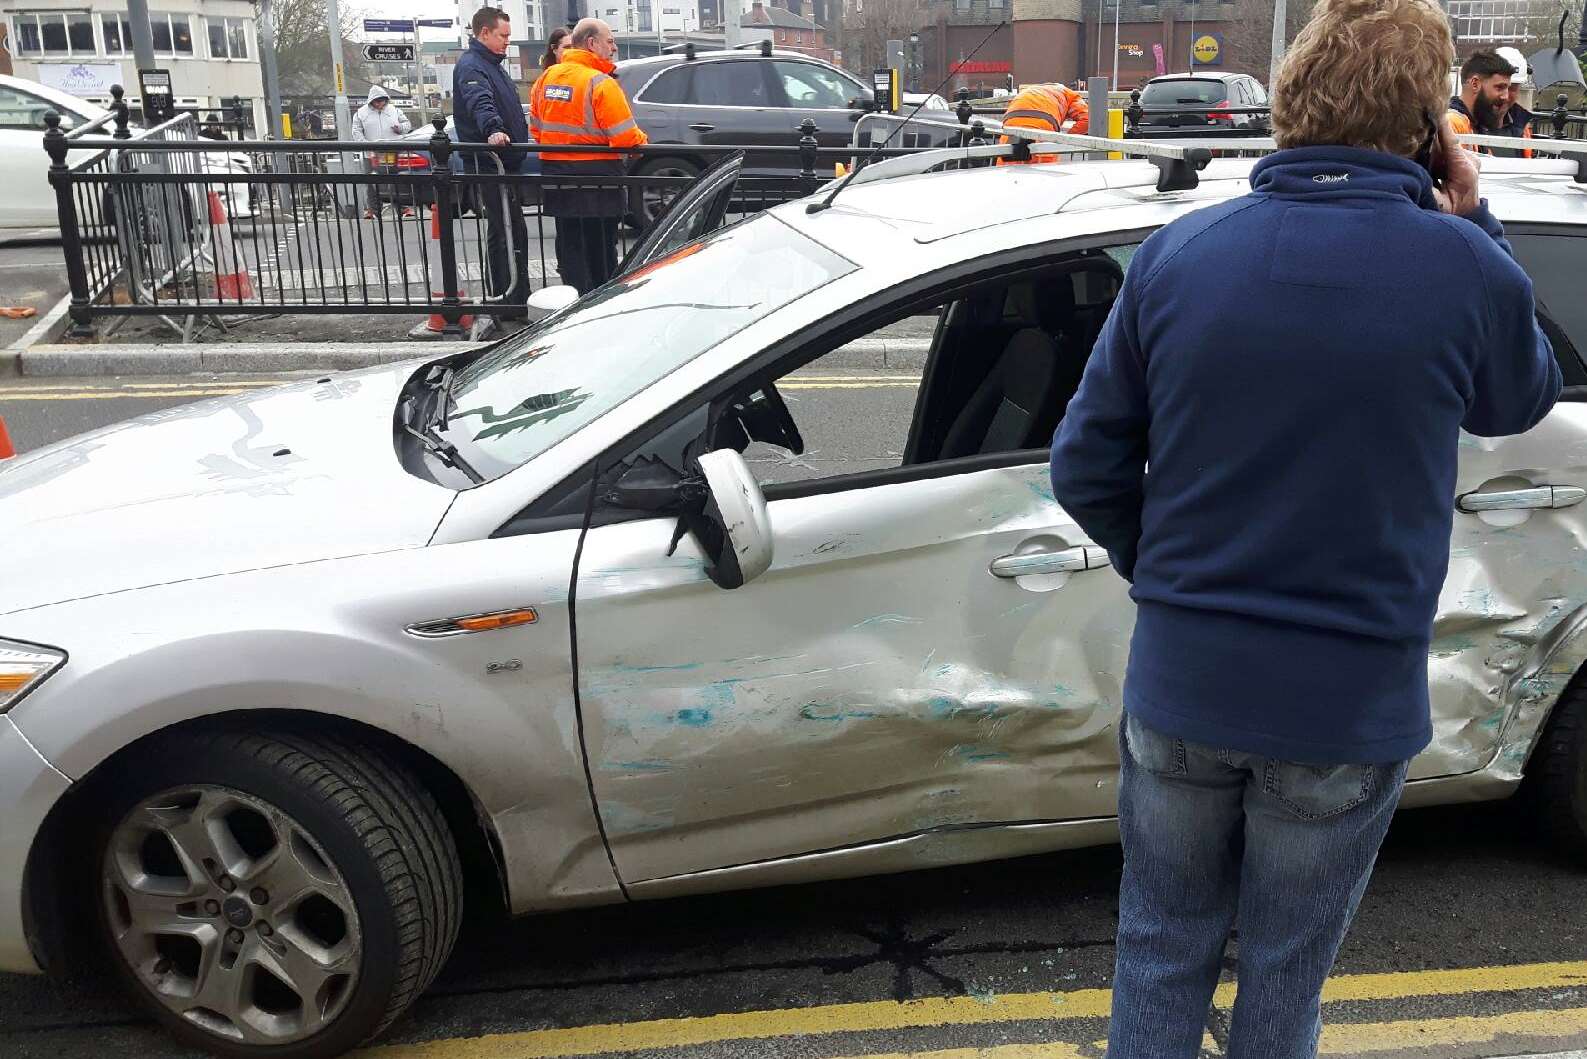 A car was damaged in the crash